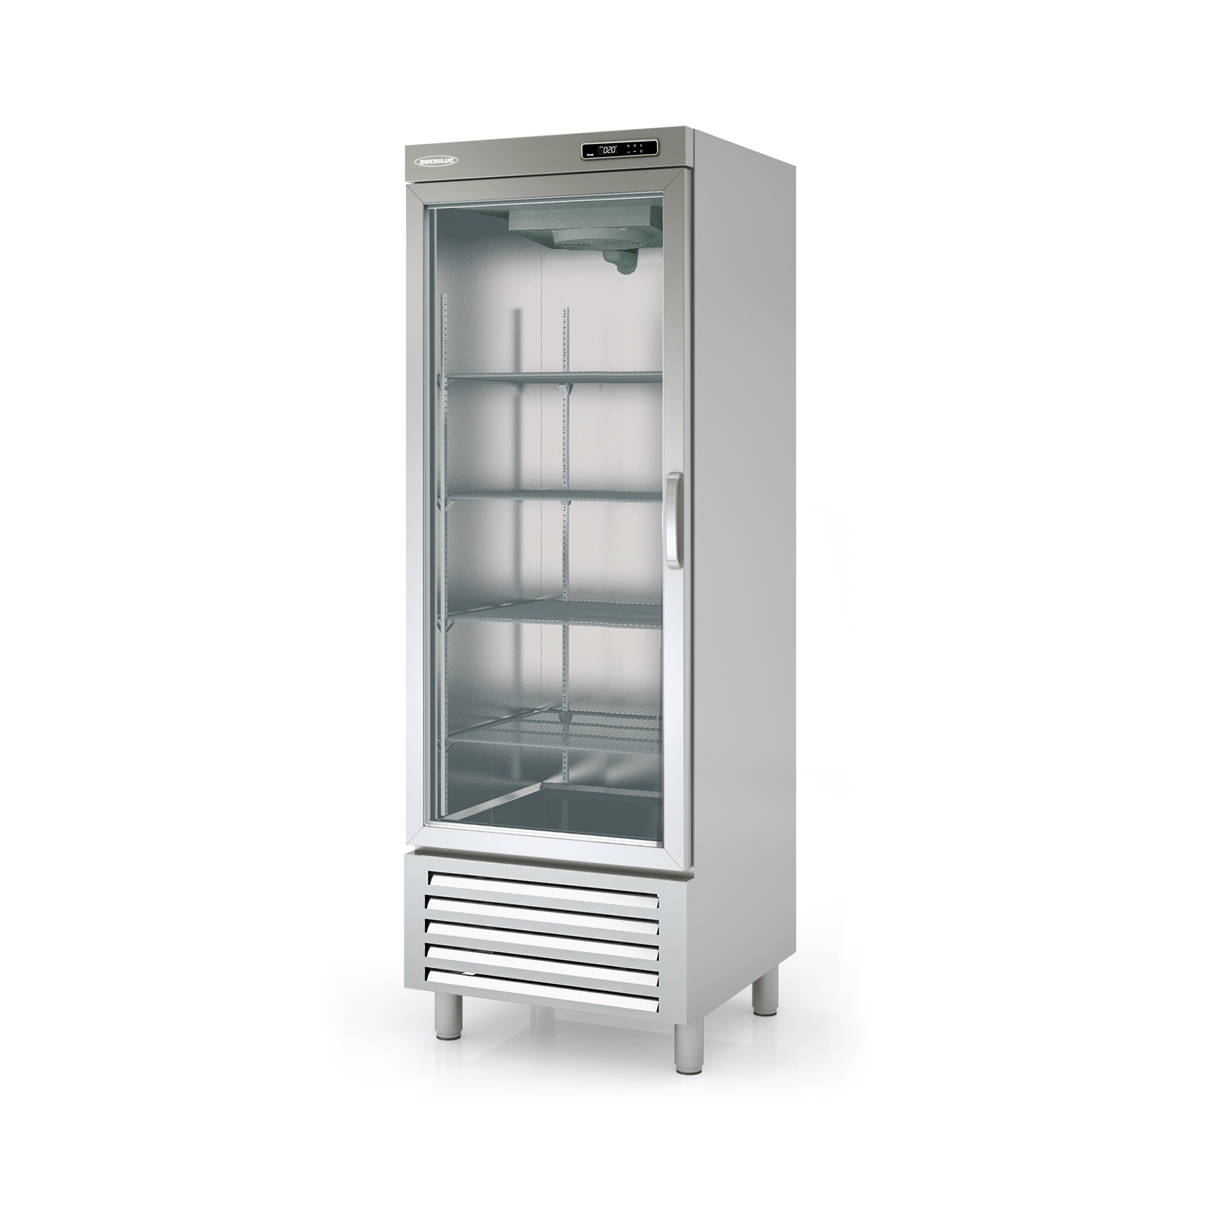 Snack Refrigerated Cabinet ARSV-75-1